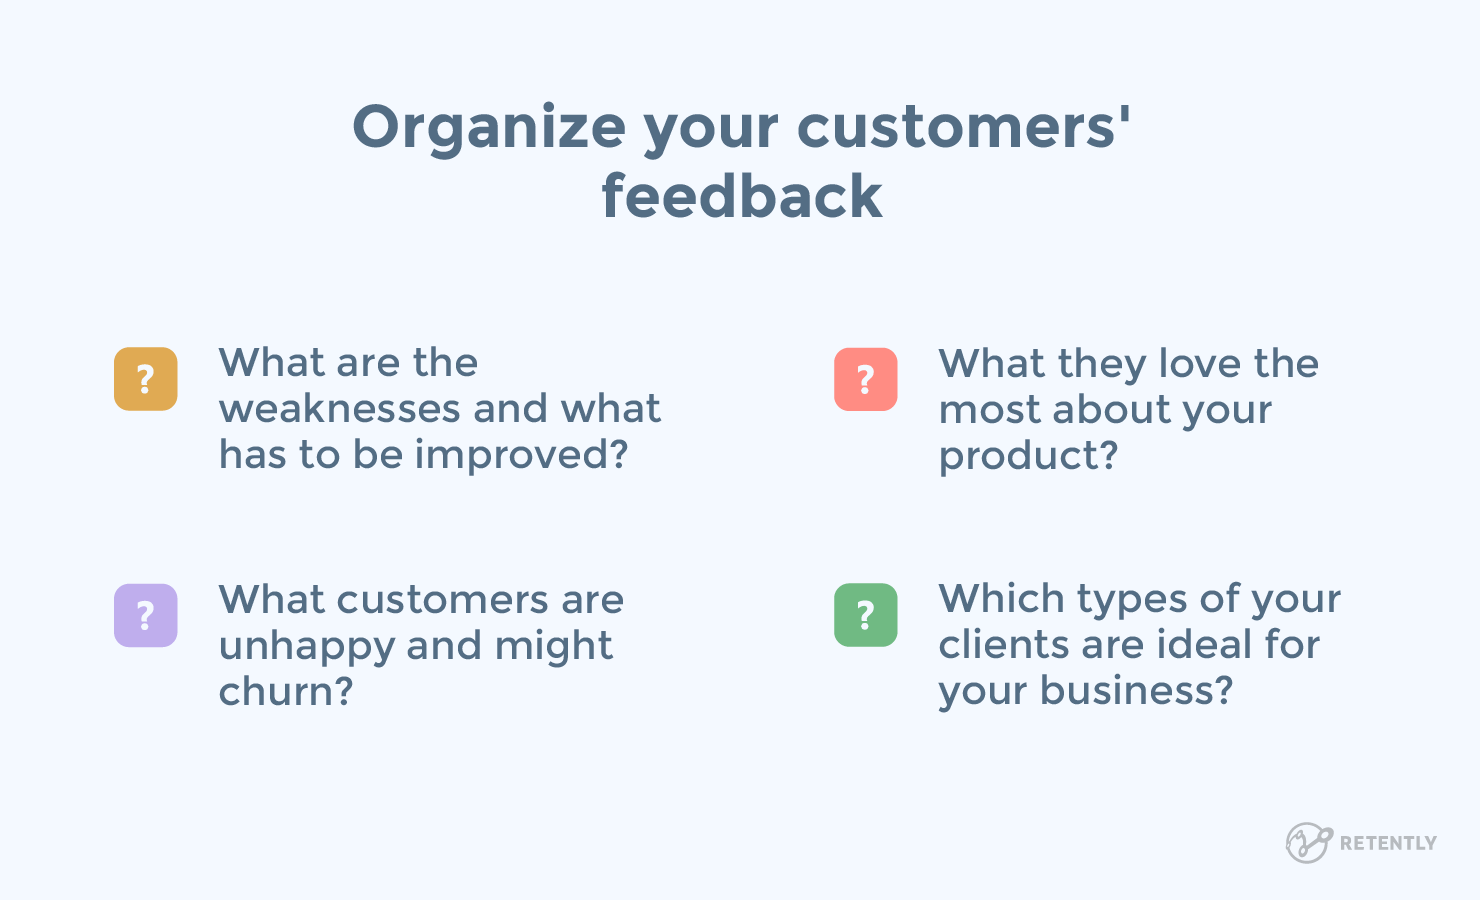 Organize your customers' feedback